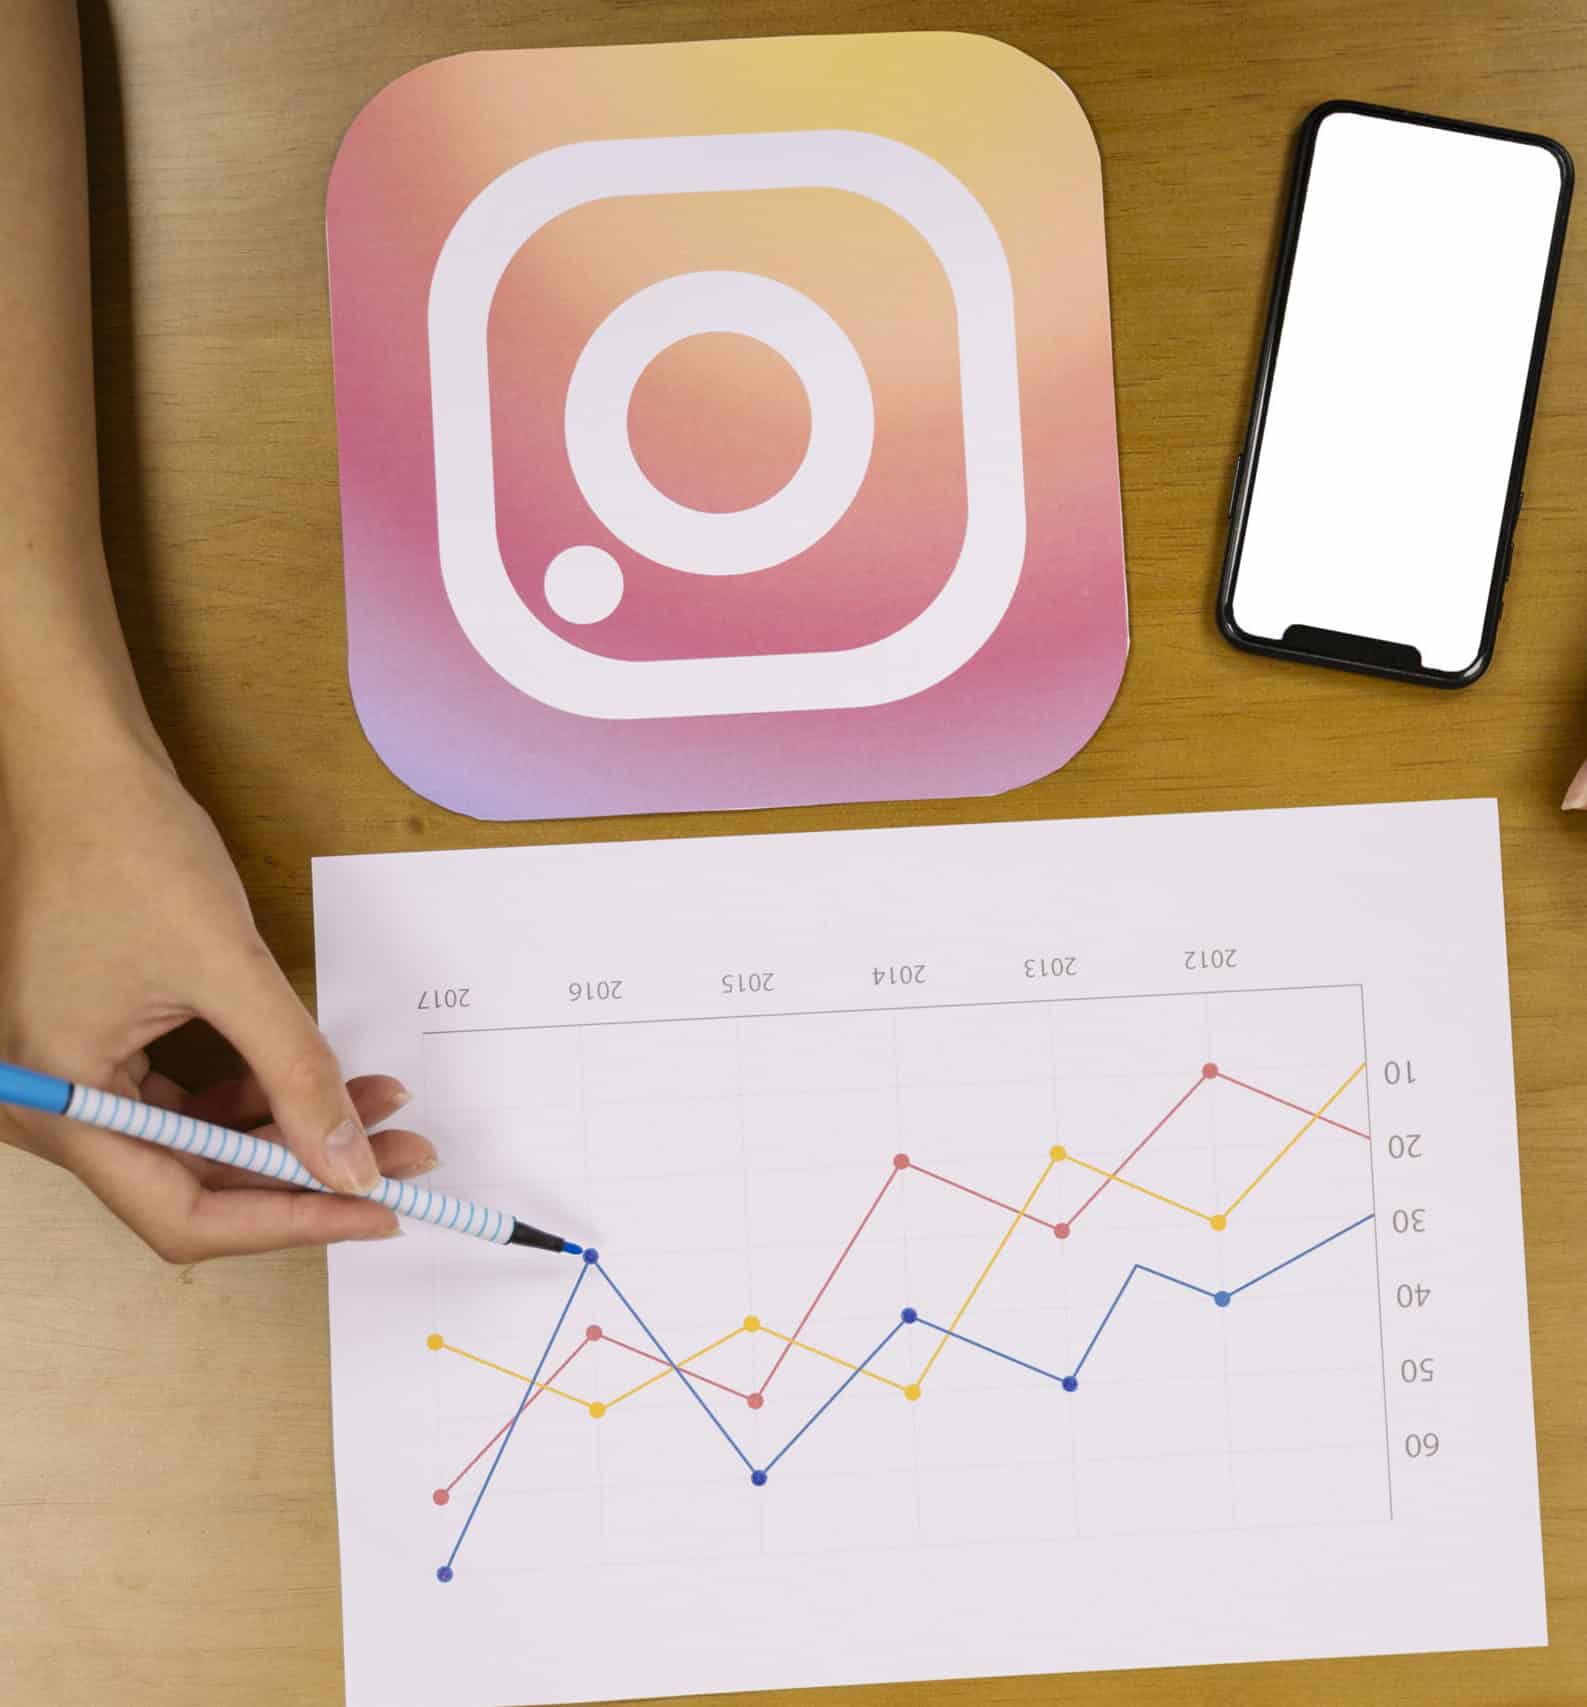 instagram marketing course